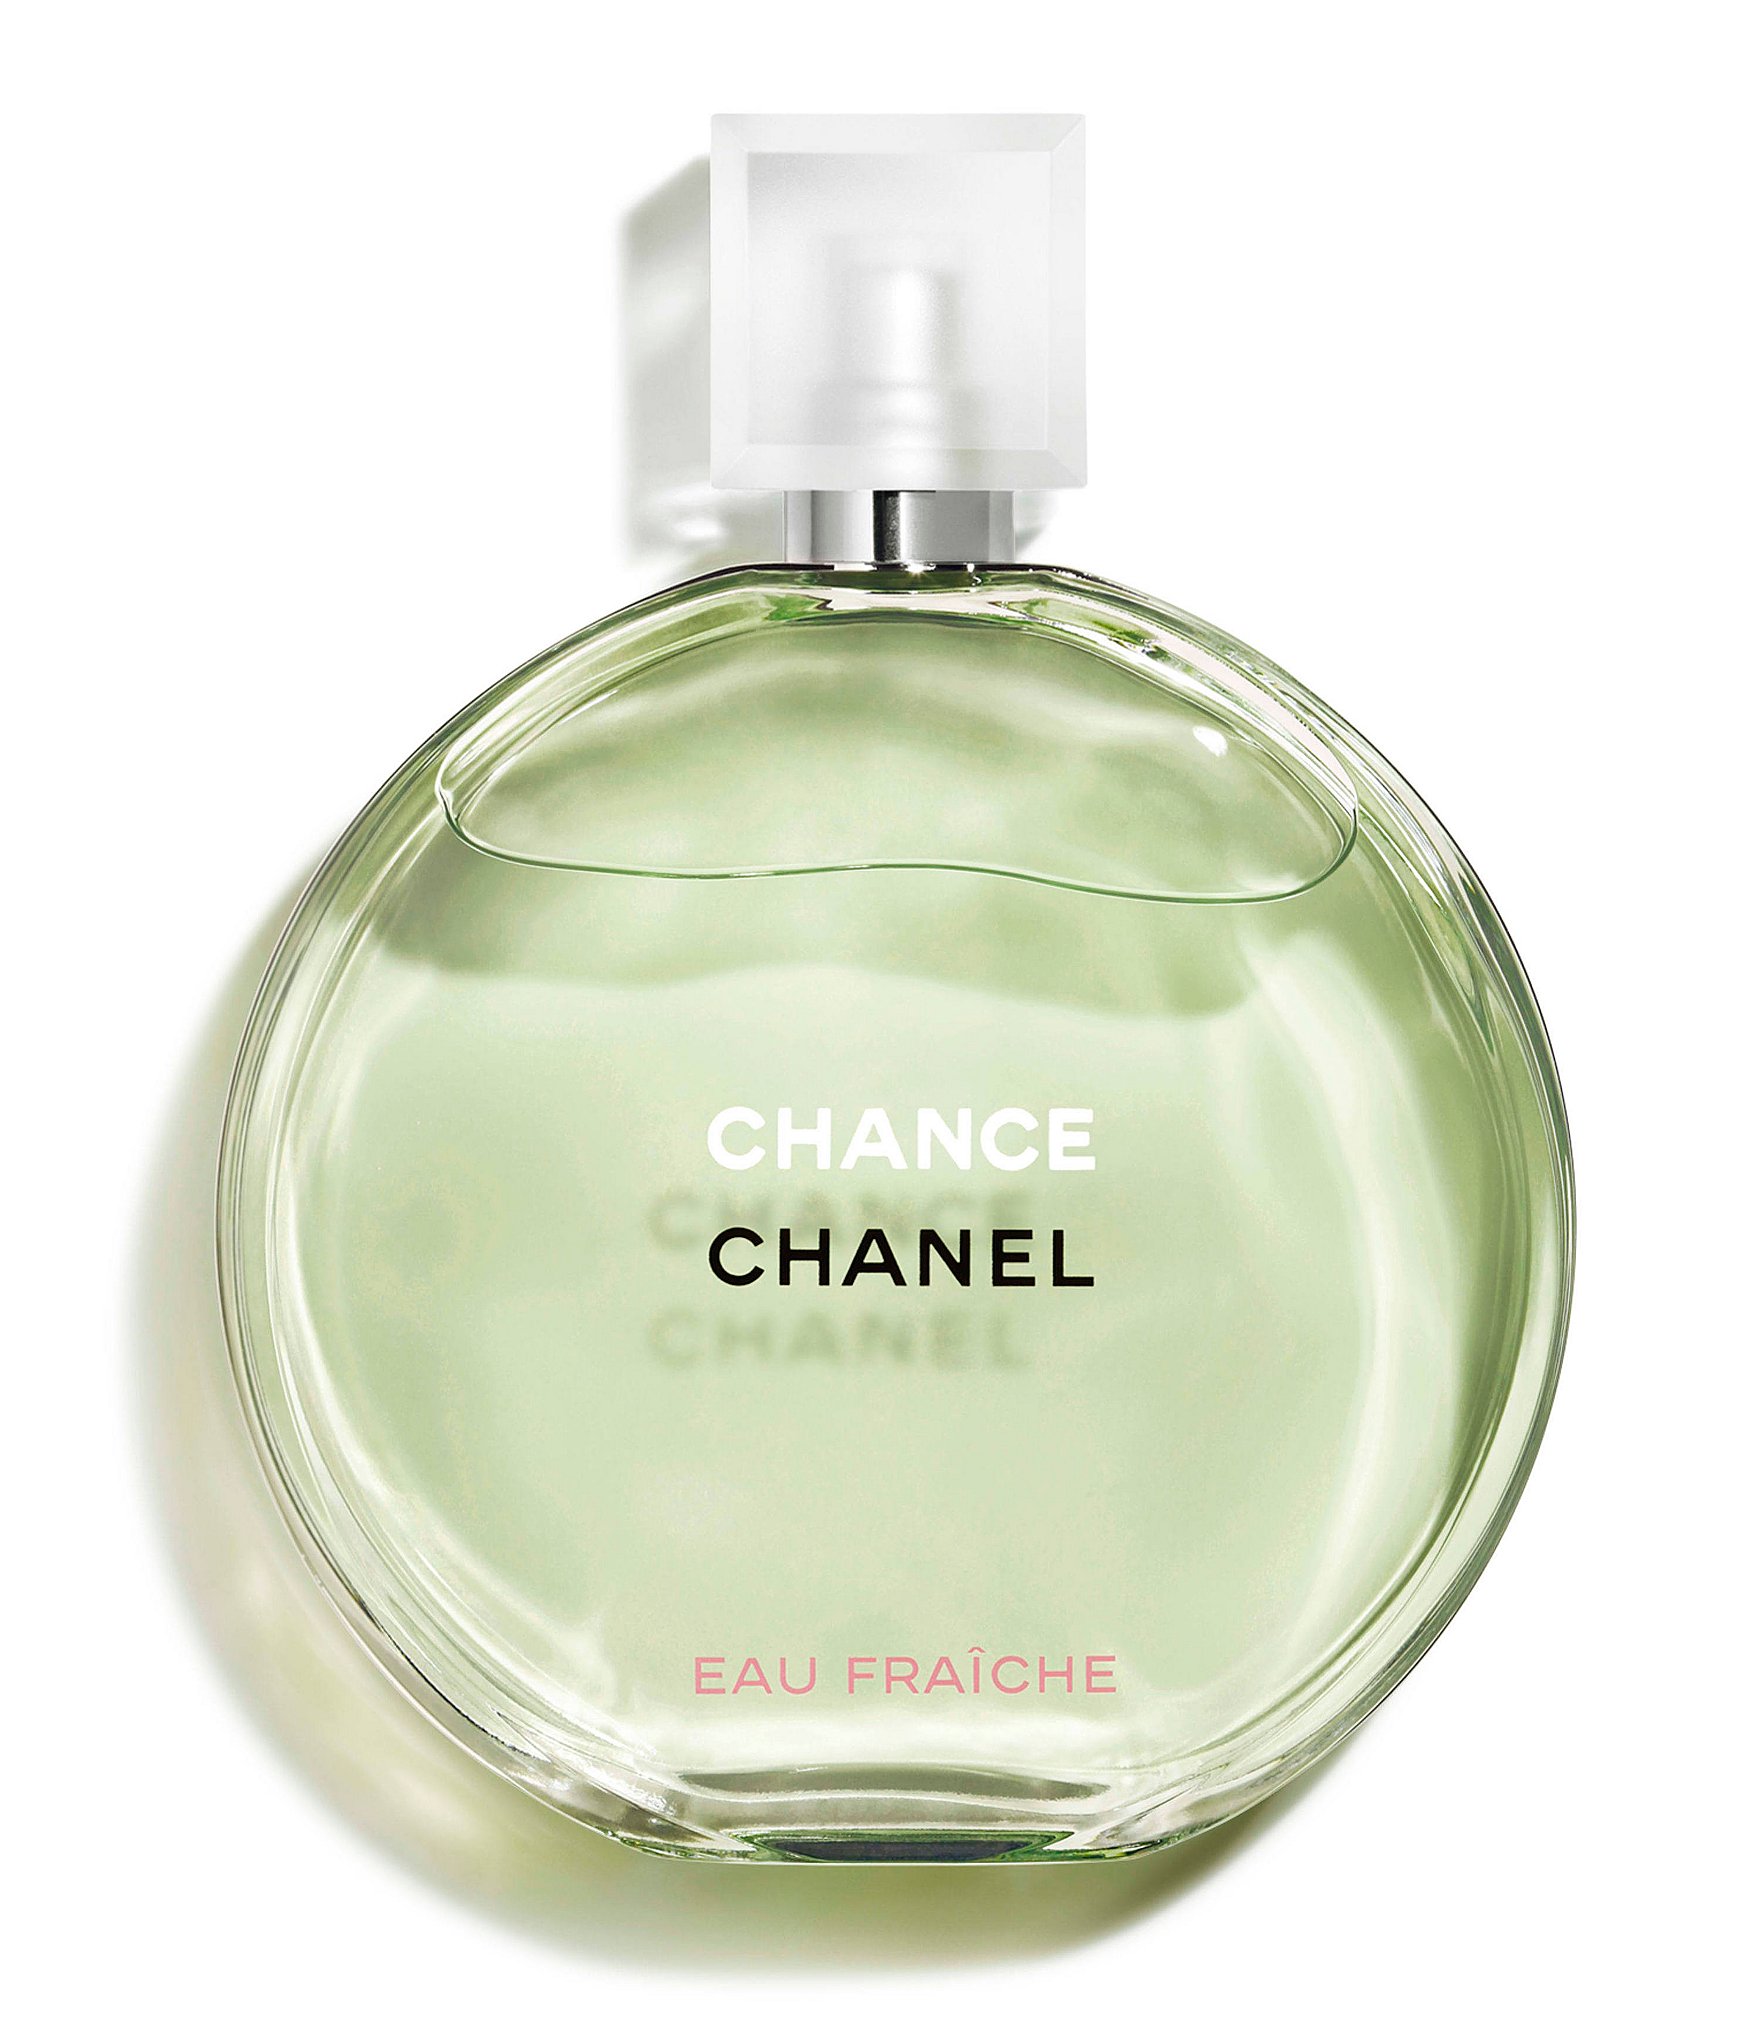 Chance Eau Vive Chanel perfume - a fragrance for women 2015